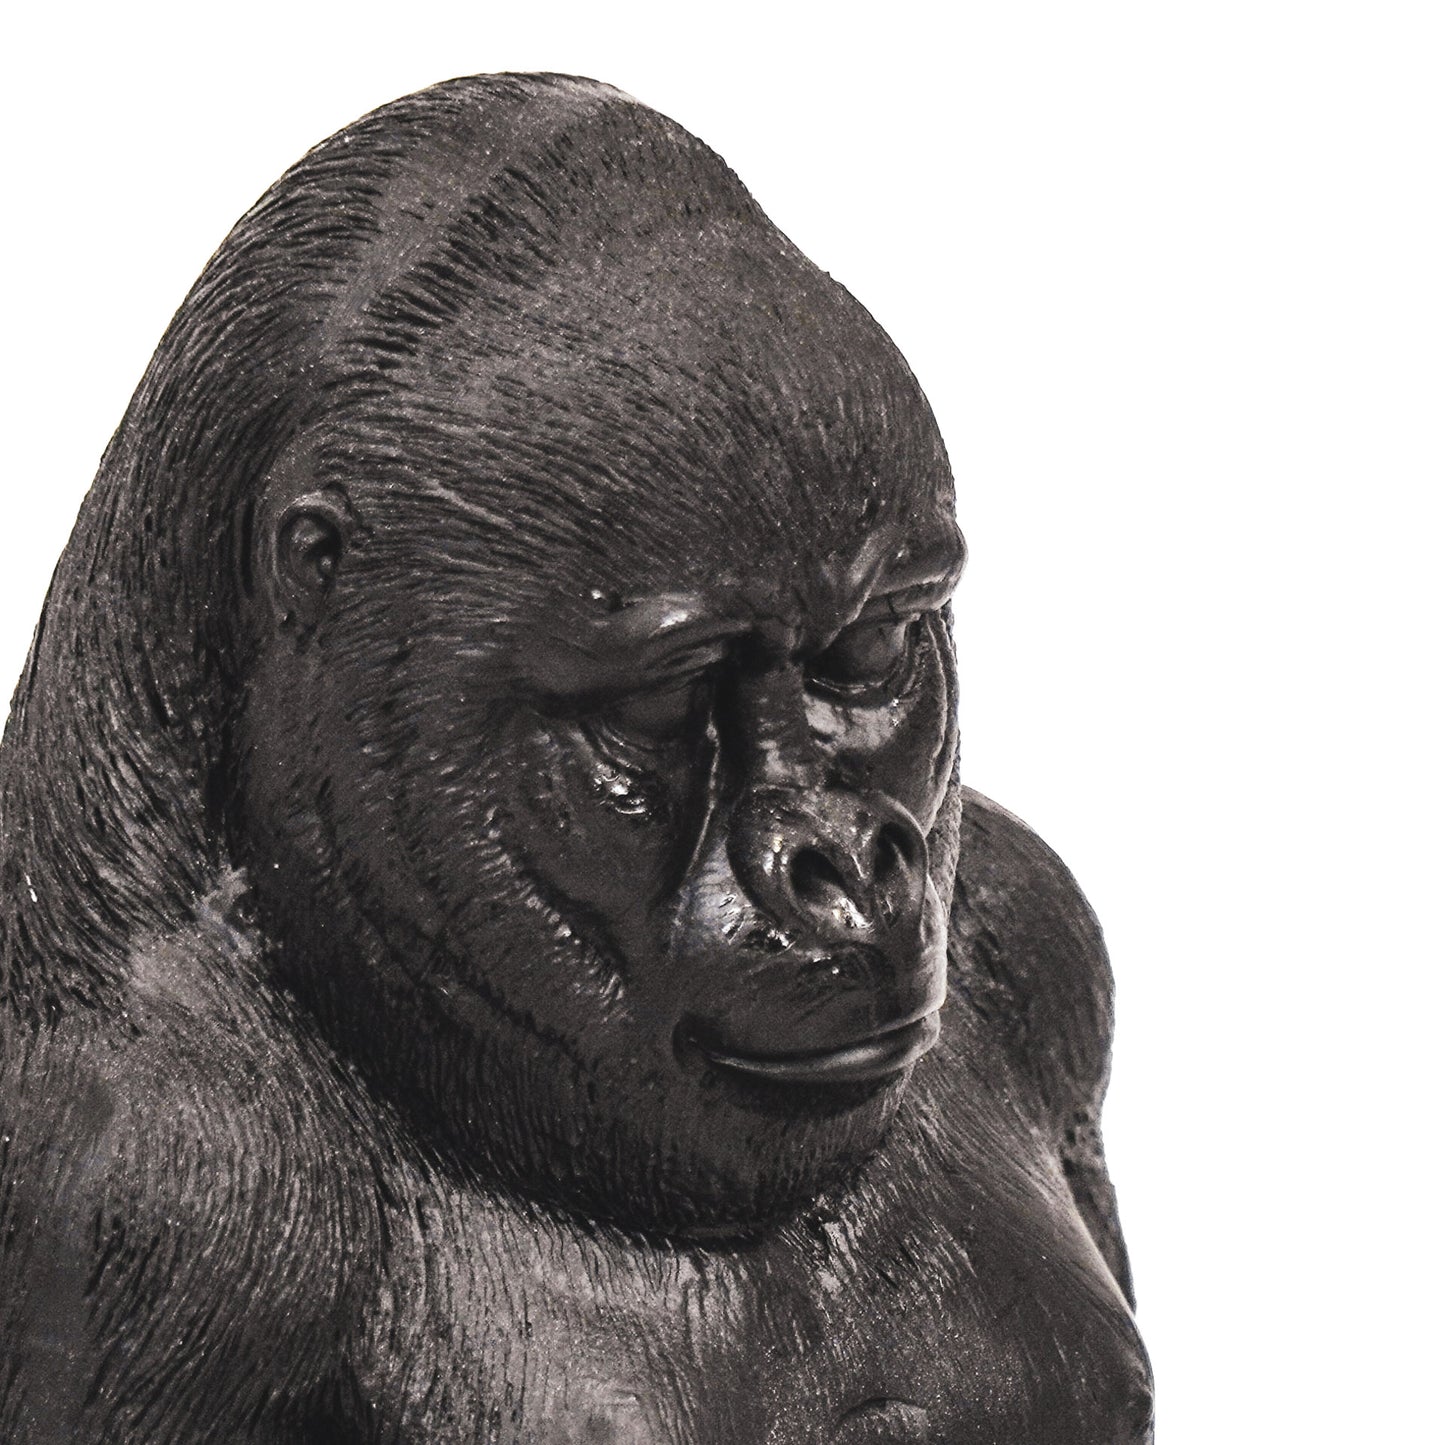 Housevitamin Gorilla - Black - 13,5x13x21cm